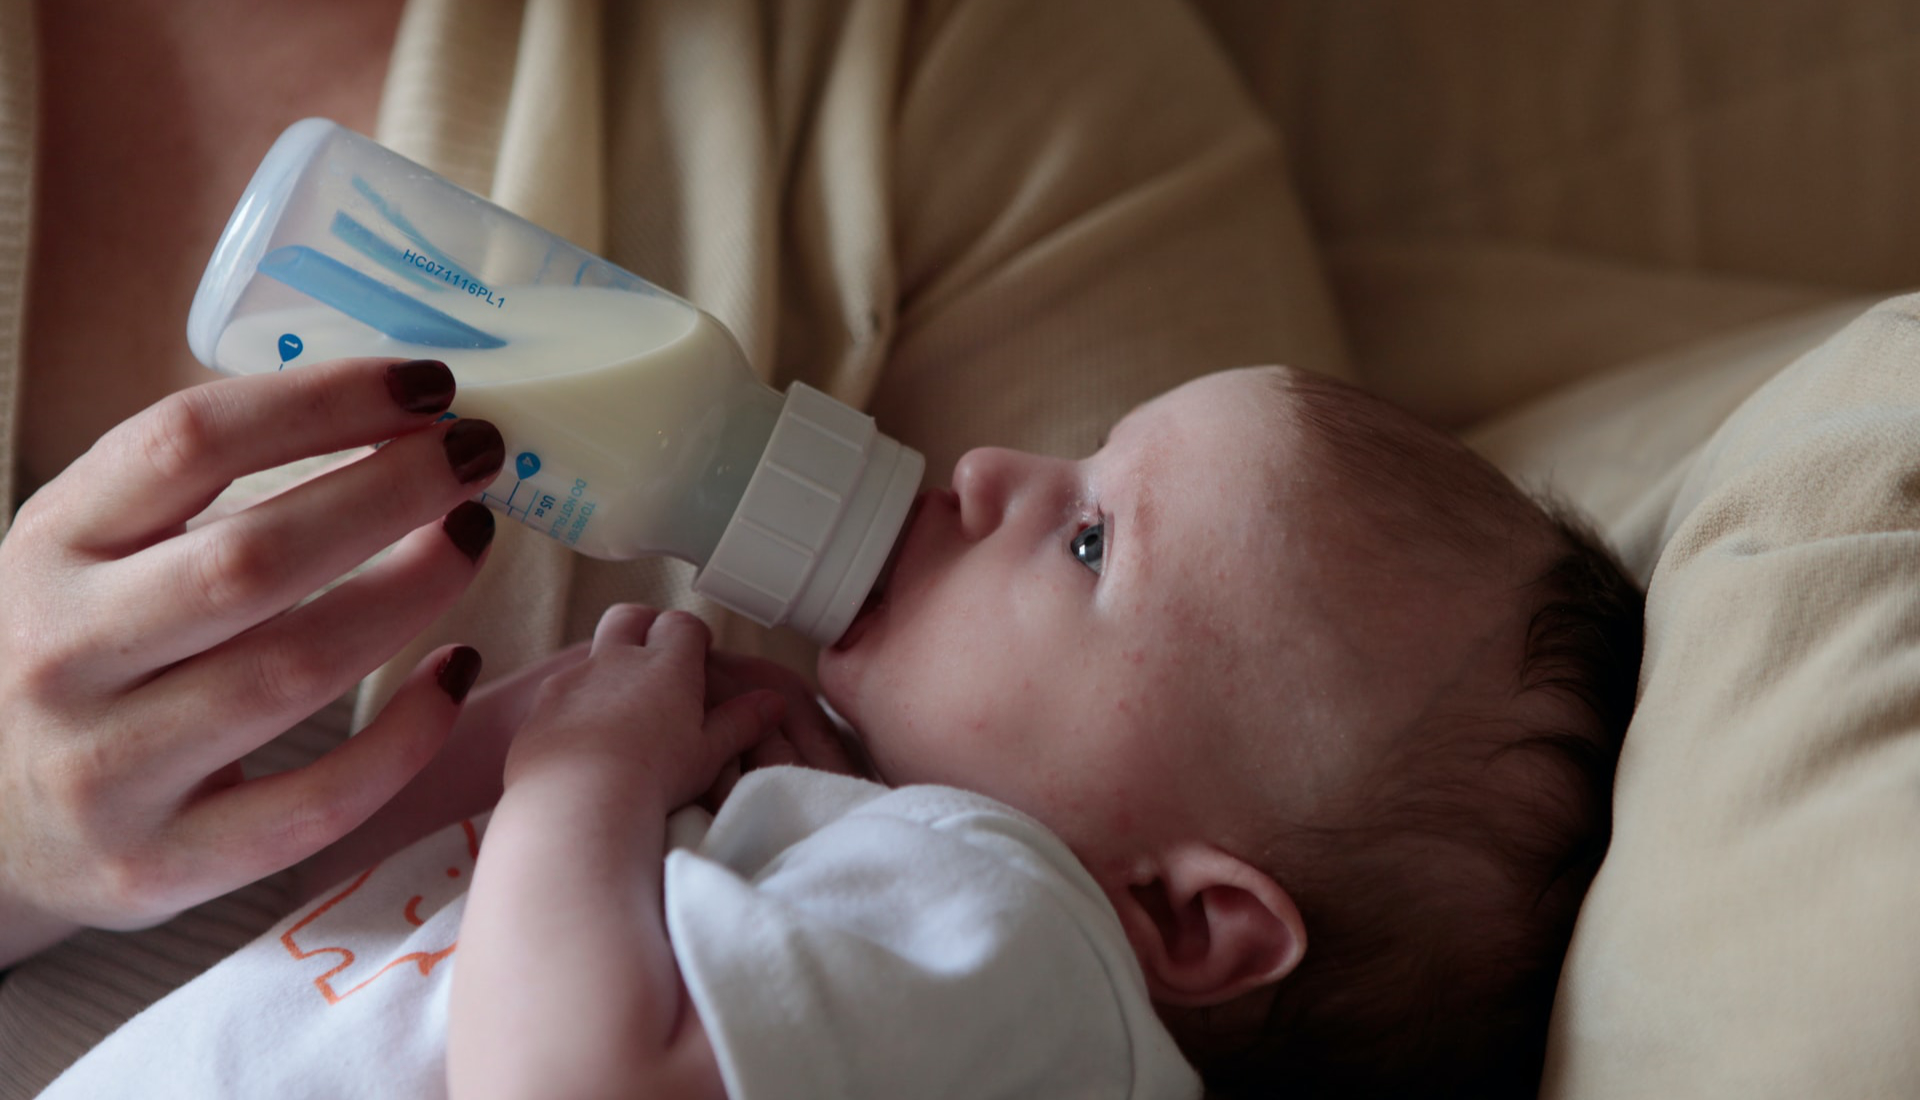 Women exposed to formula industry marketing more likely to abandon breastfeeding